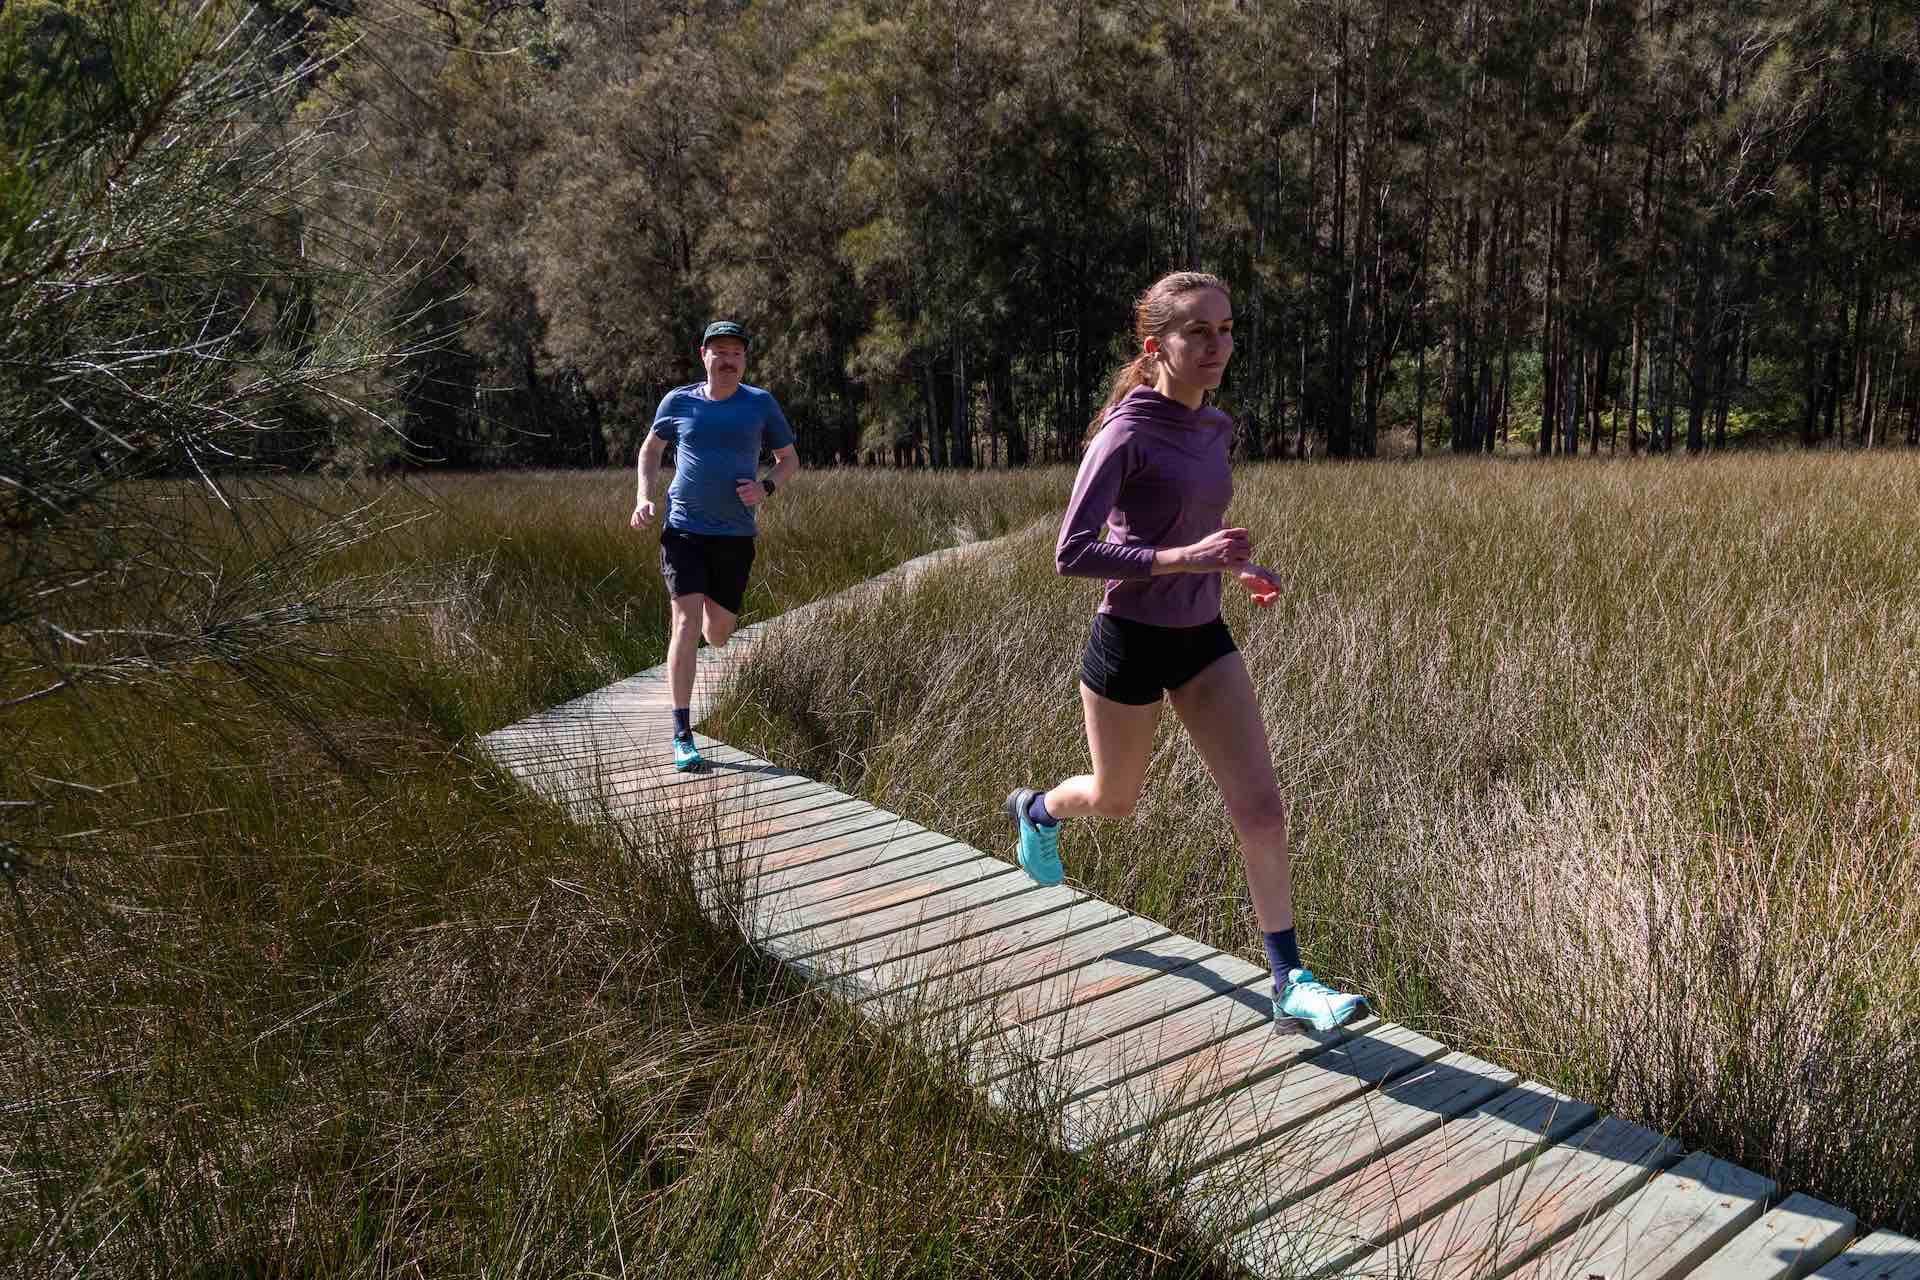 Trail Running Gear: Follow Your Own Path